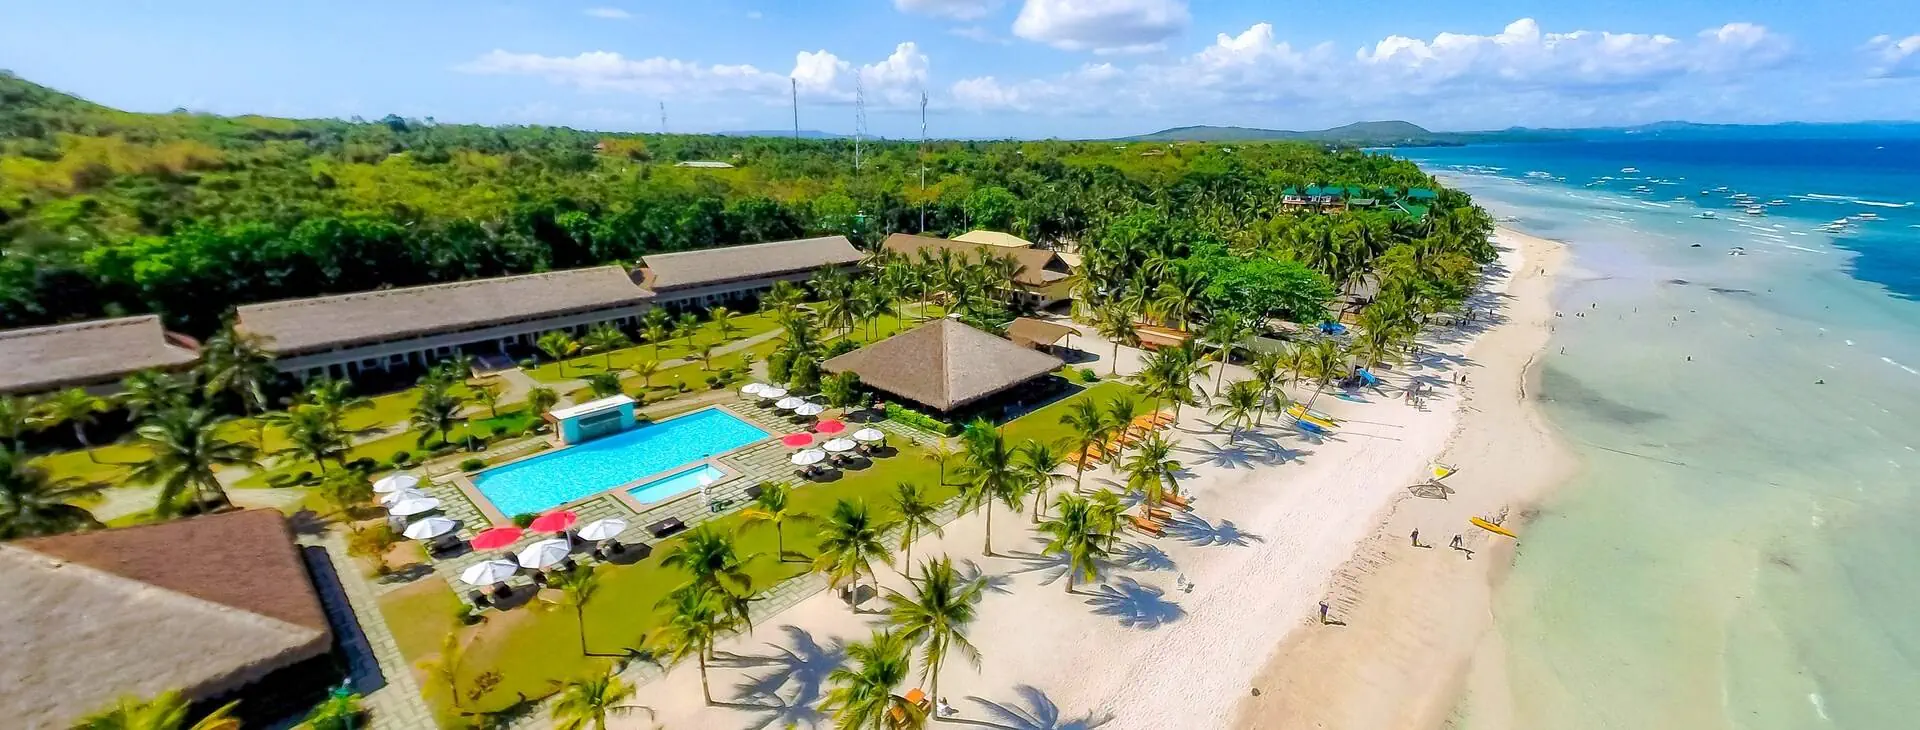 Filipiny Visayas Panglao Island Bohol Beach Club